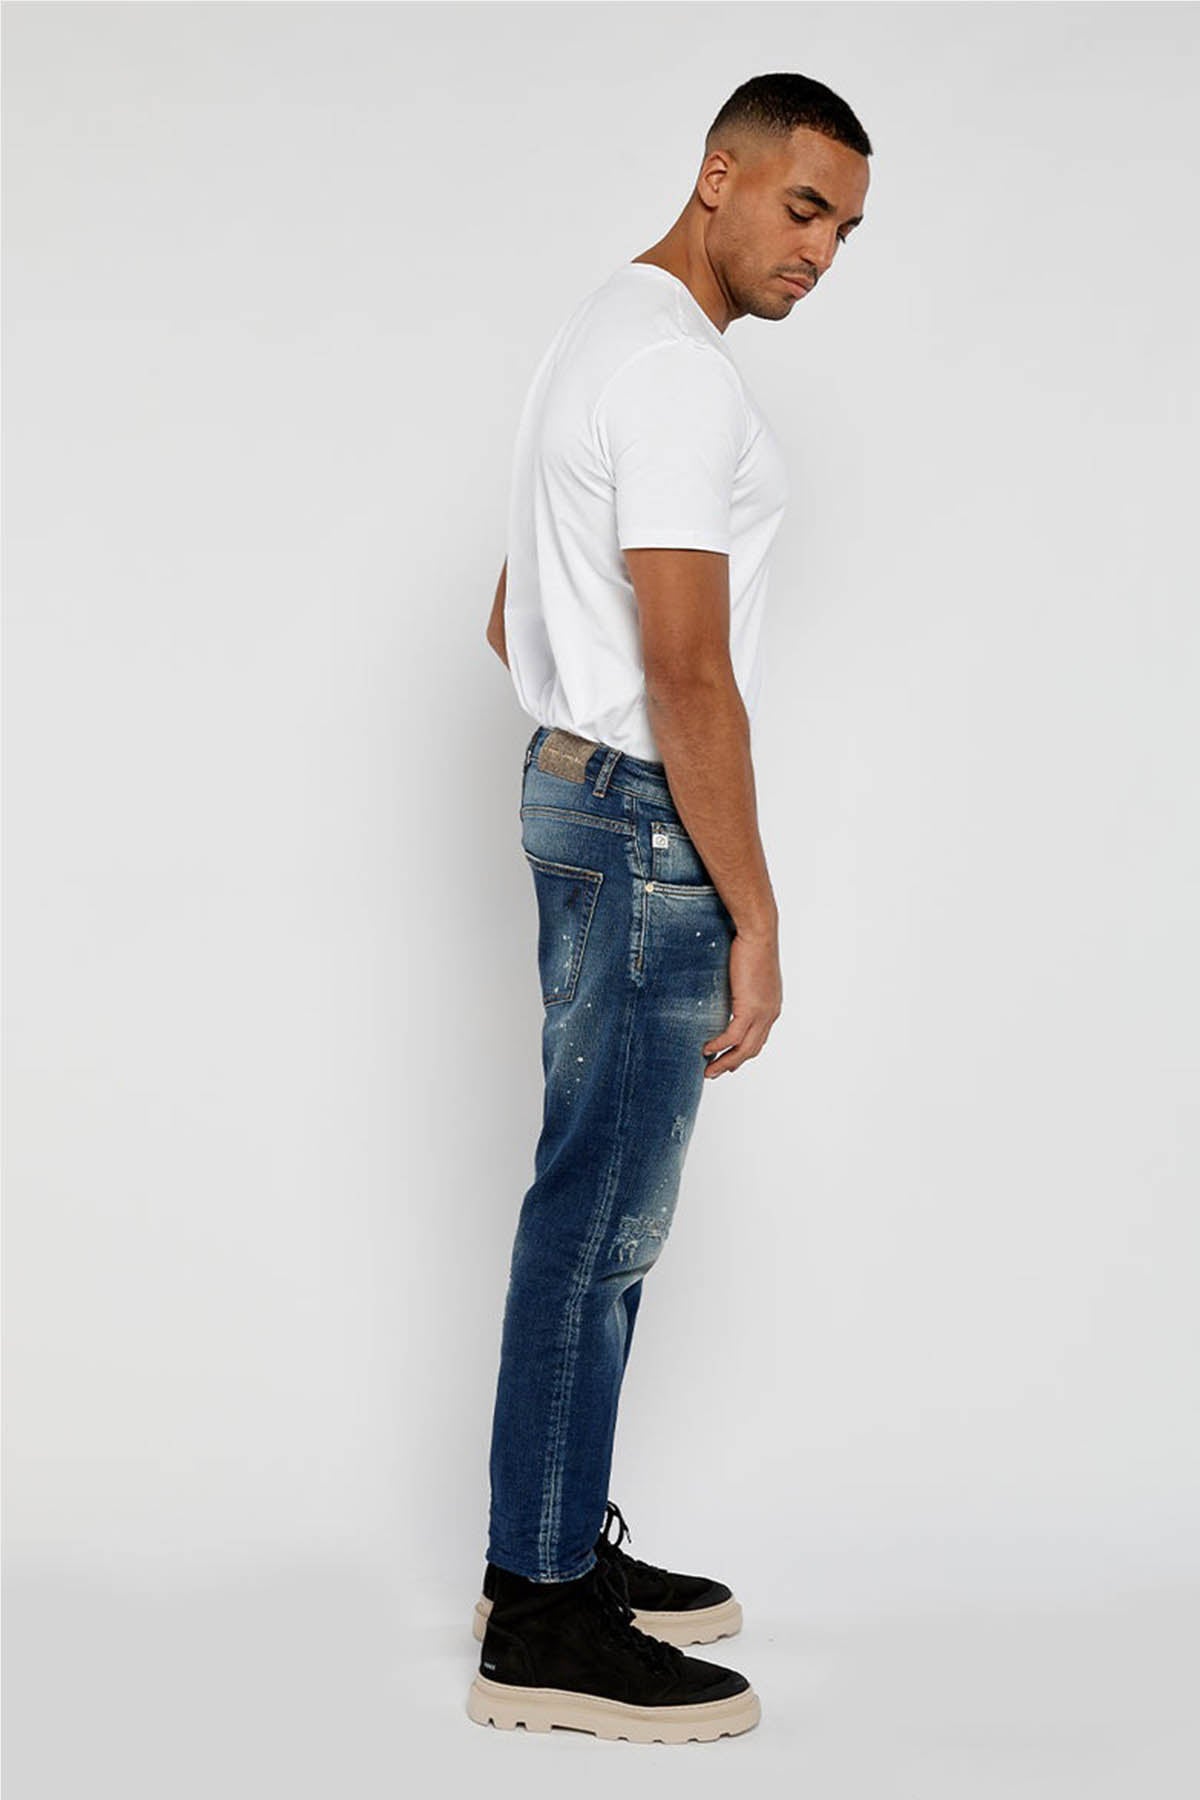 Goldgarn Neckarau Twisted Fit Jeans-Libas Trendy Fashion Store